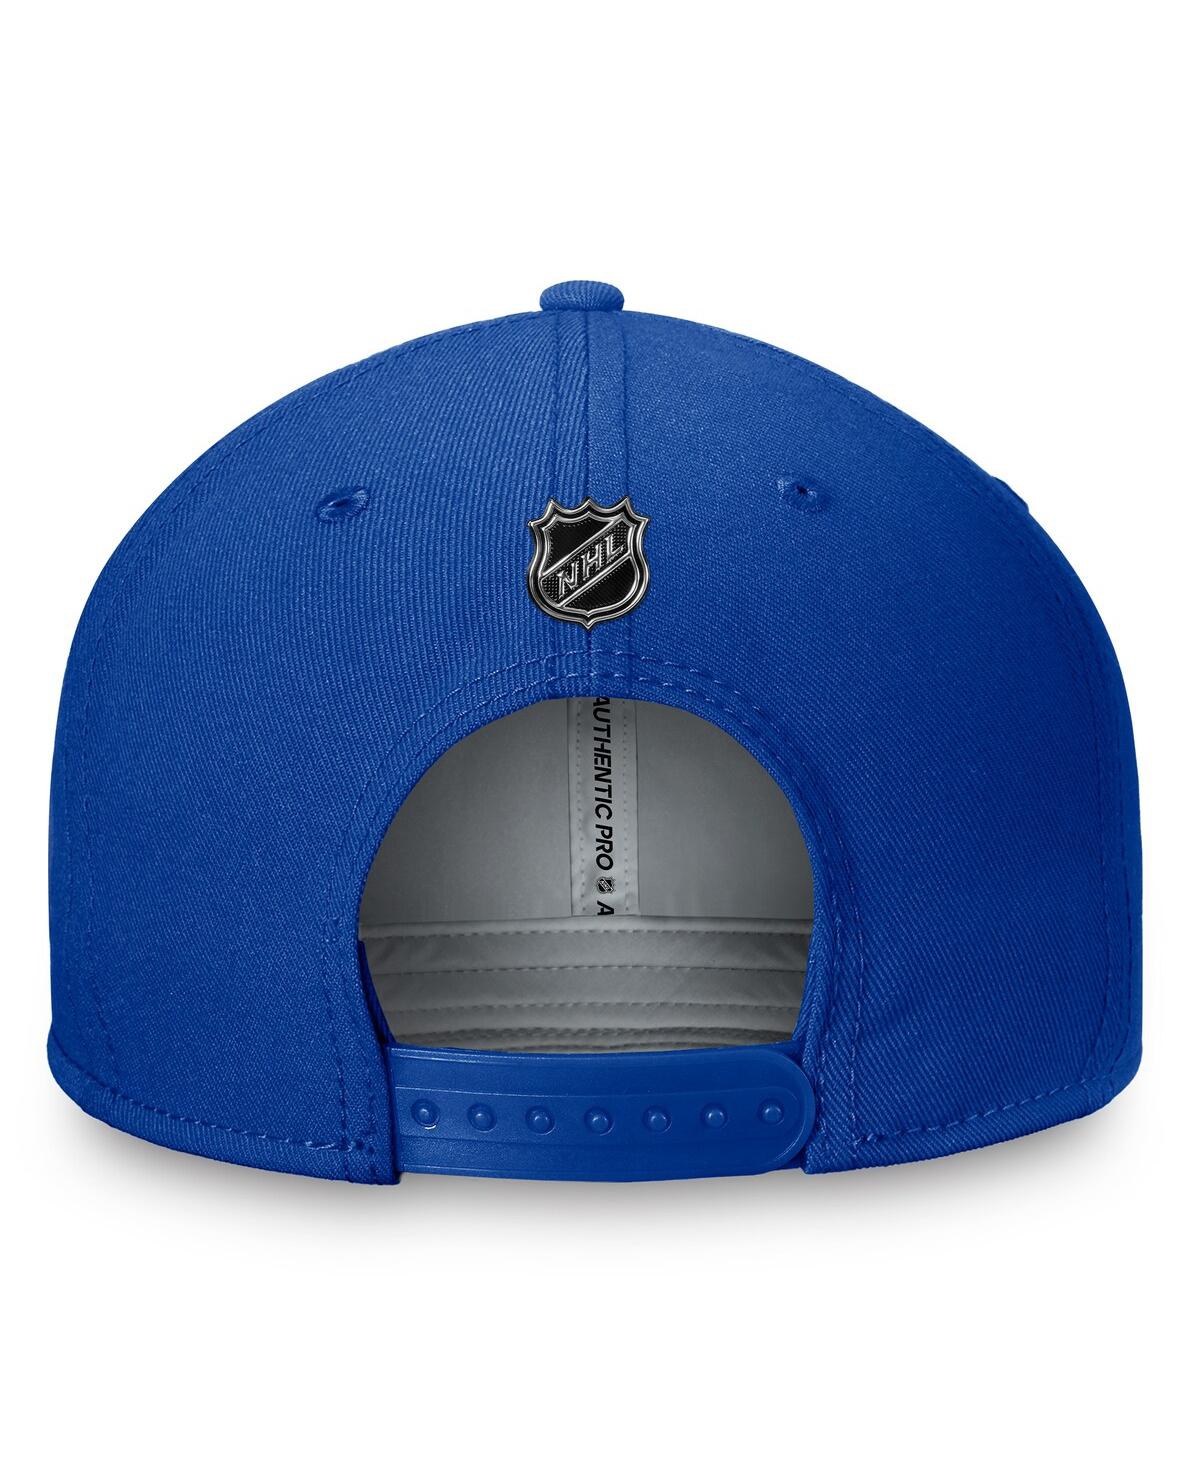 Shop Fanatics Men's  Royal New York Islanders Authentic Pro Training Camp Snapback Hat